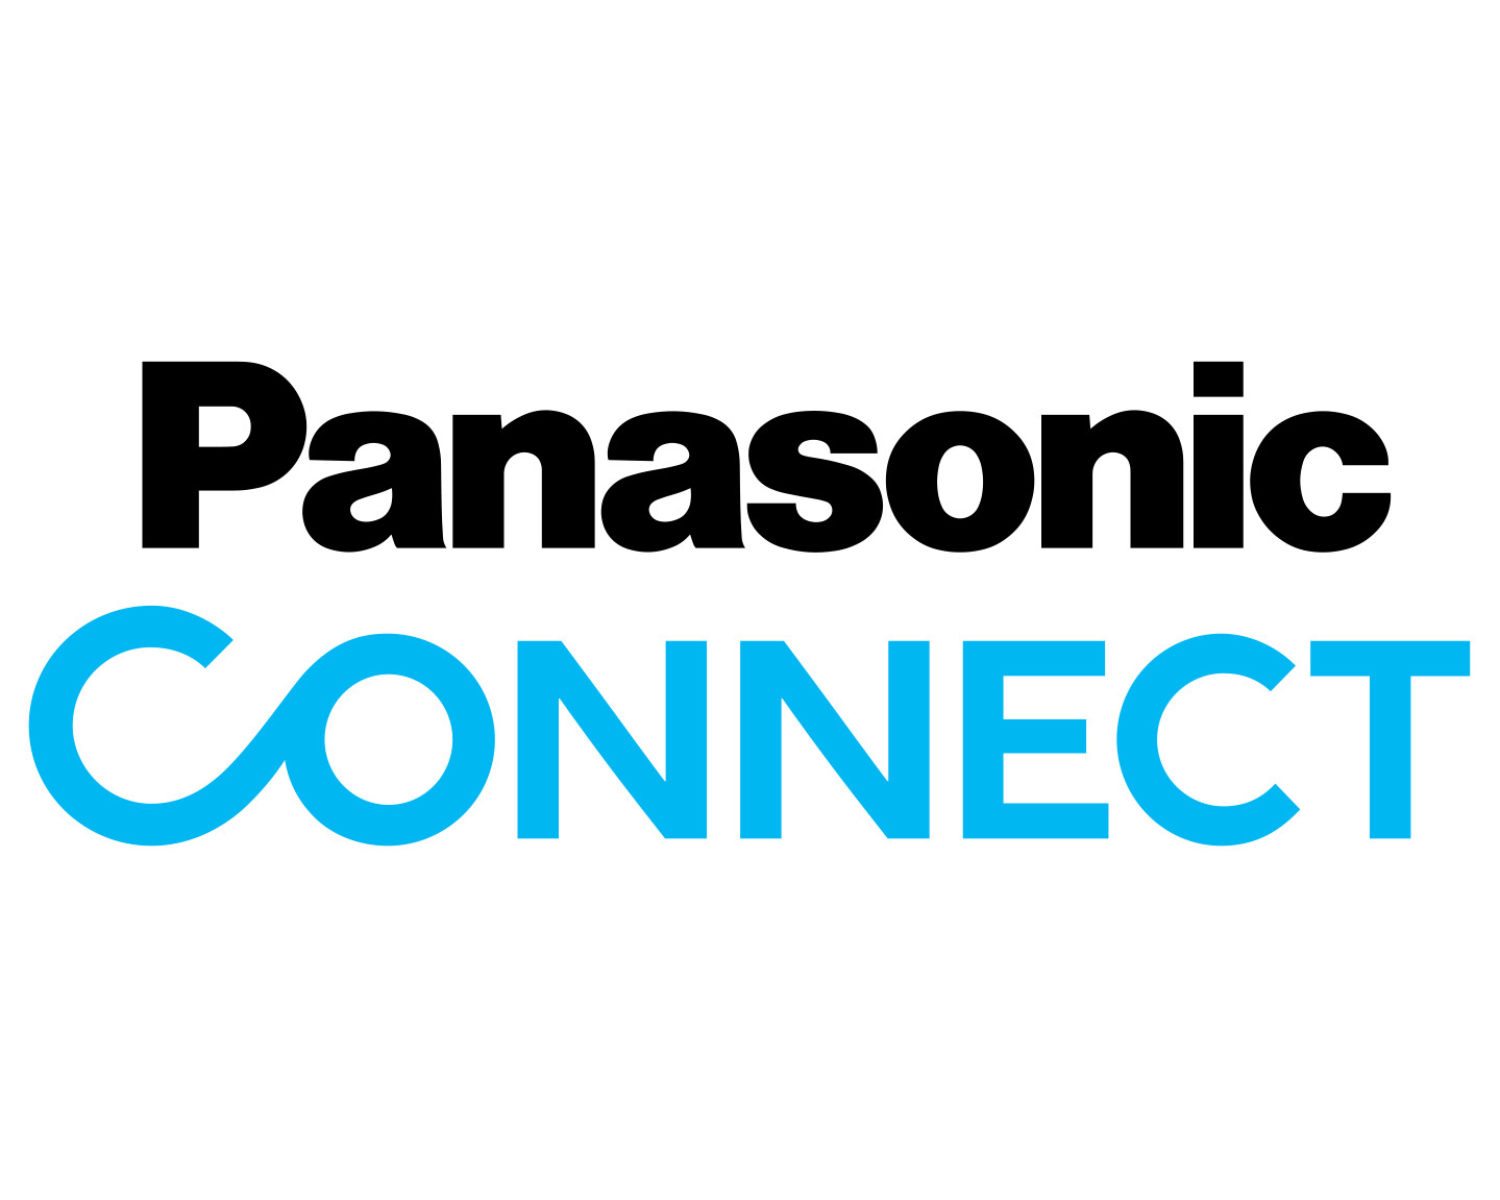 Panasonic Connect Europe GmbH